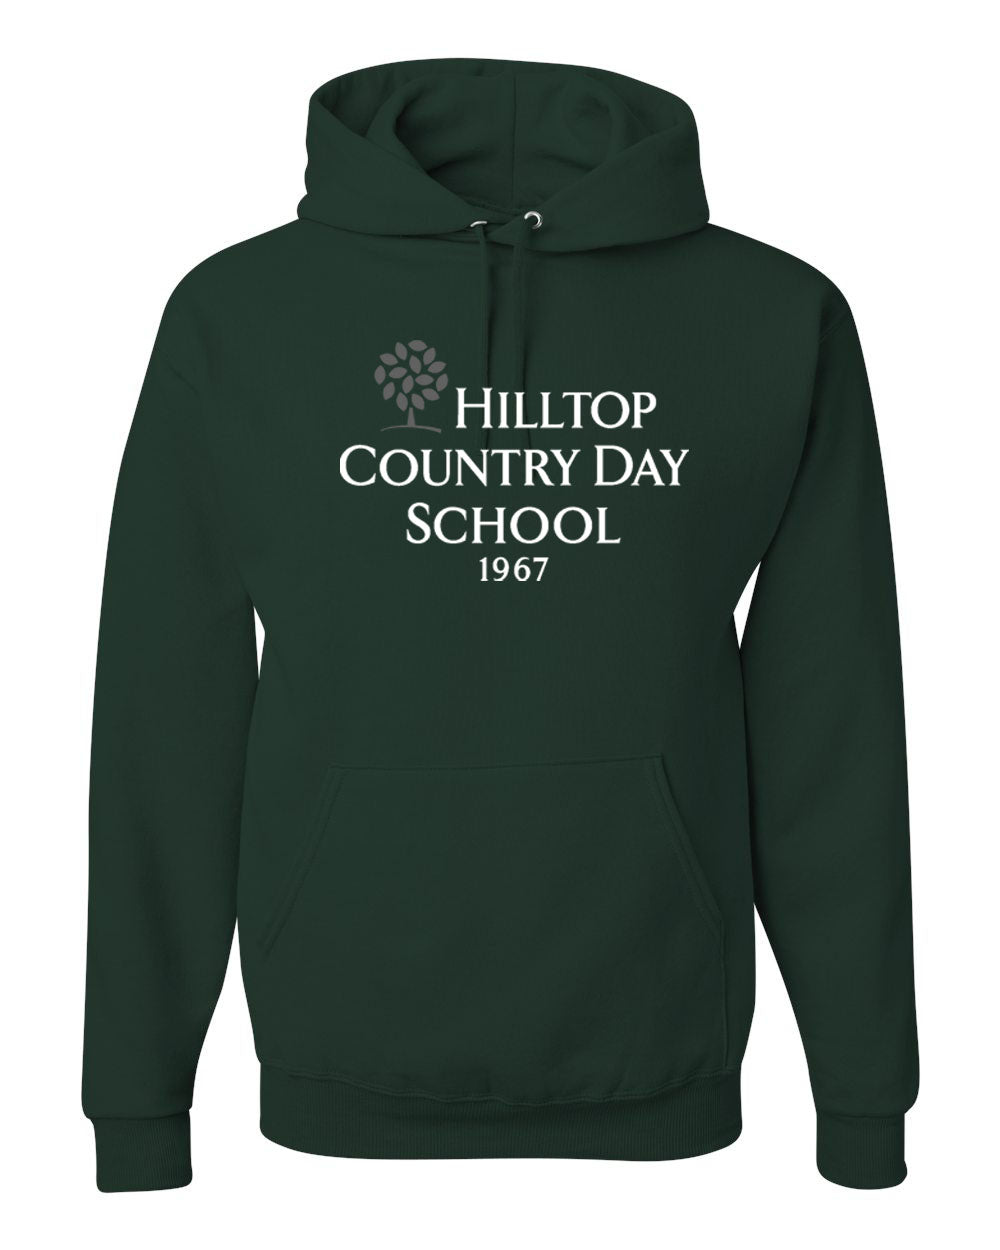 Hilltop Country Day School Design 2 Hooded Sweatshirt